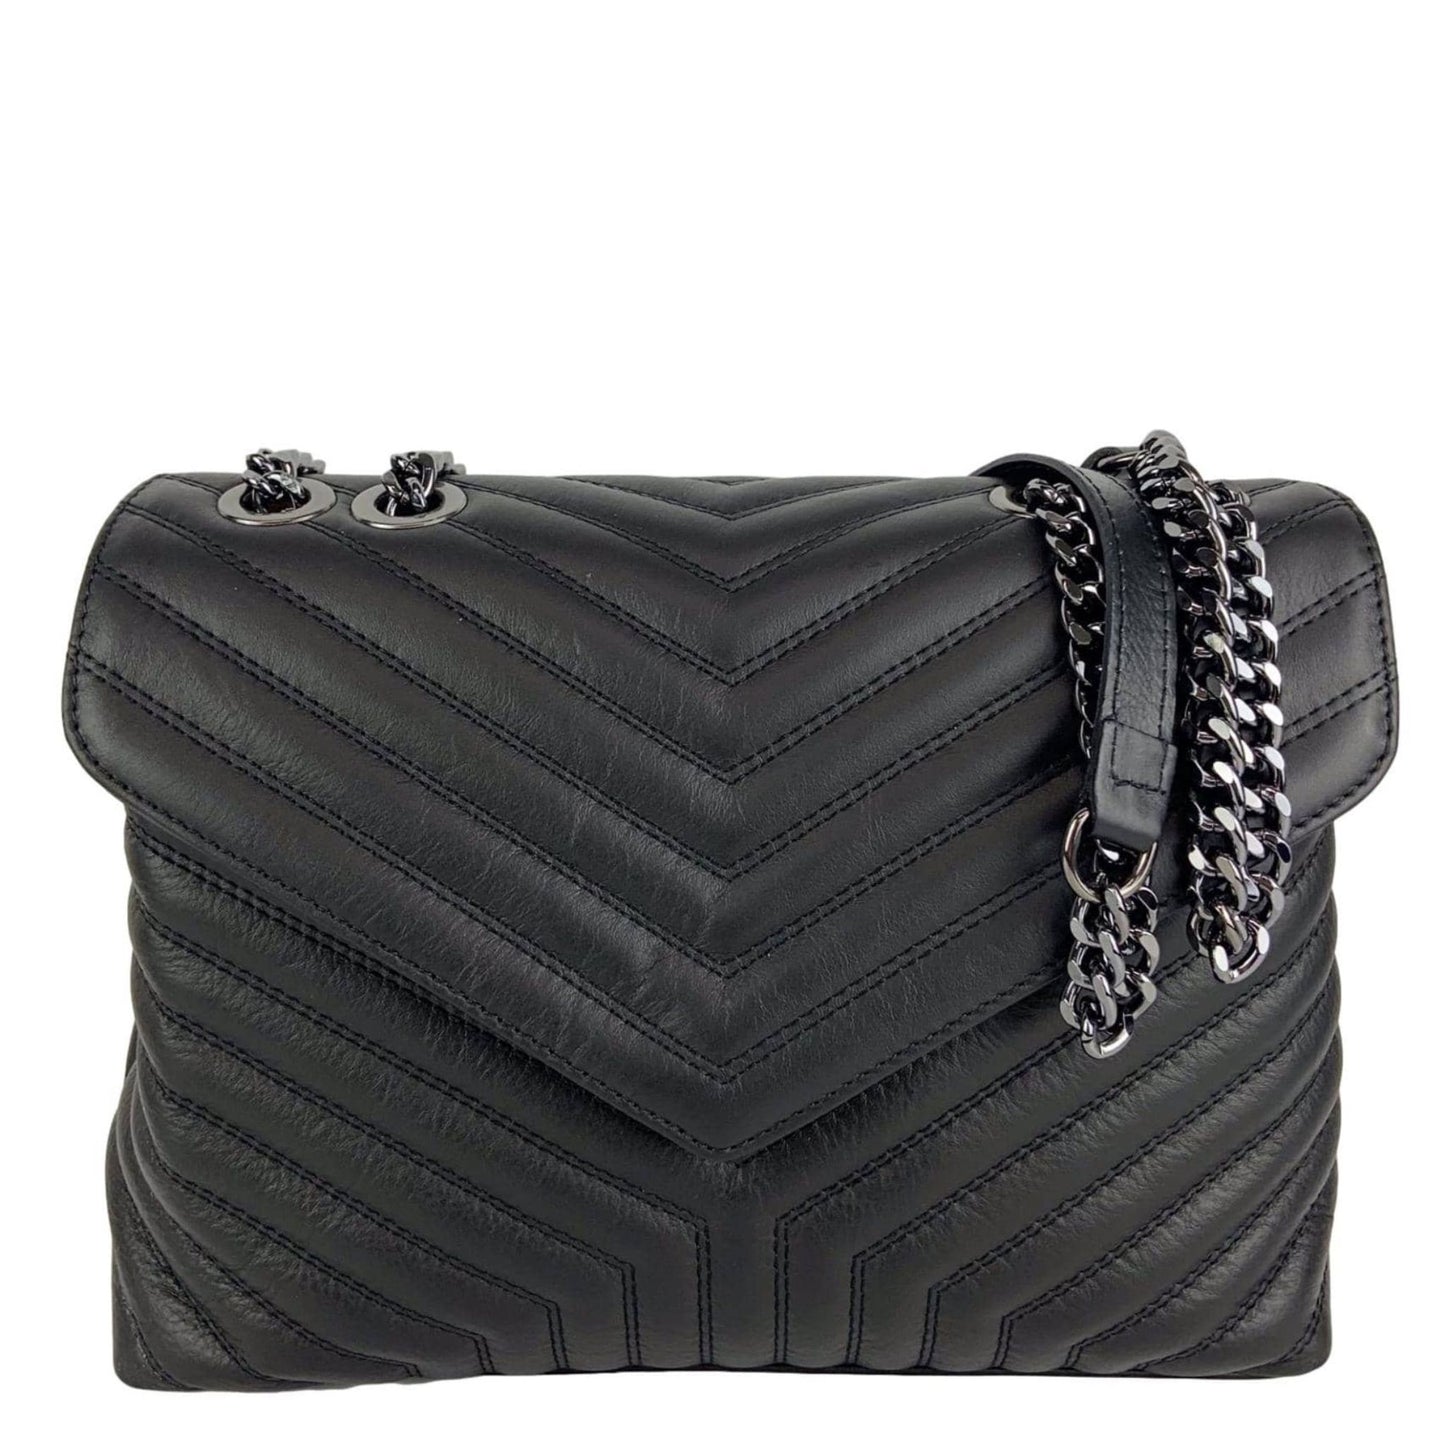 Black quilted leather handbag